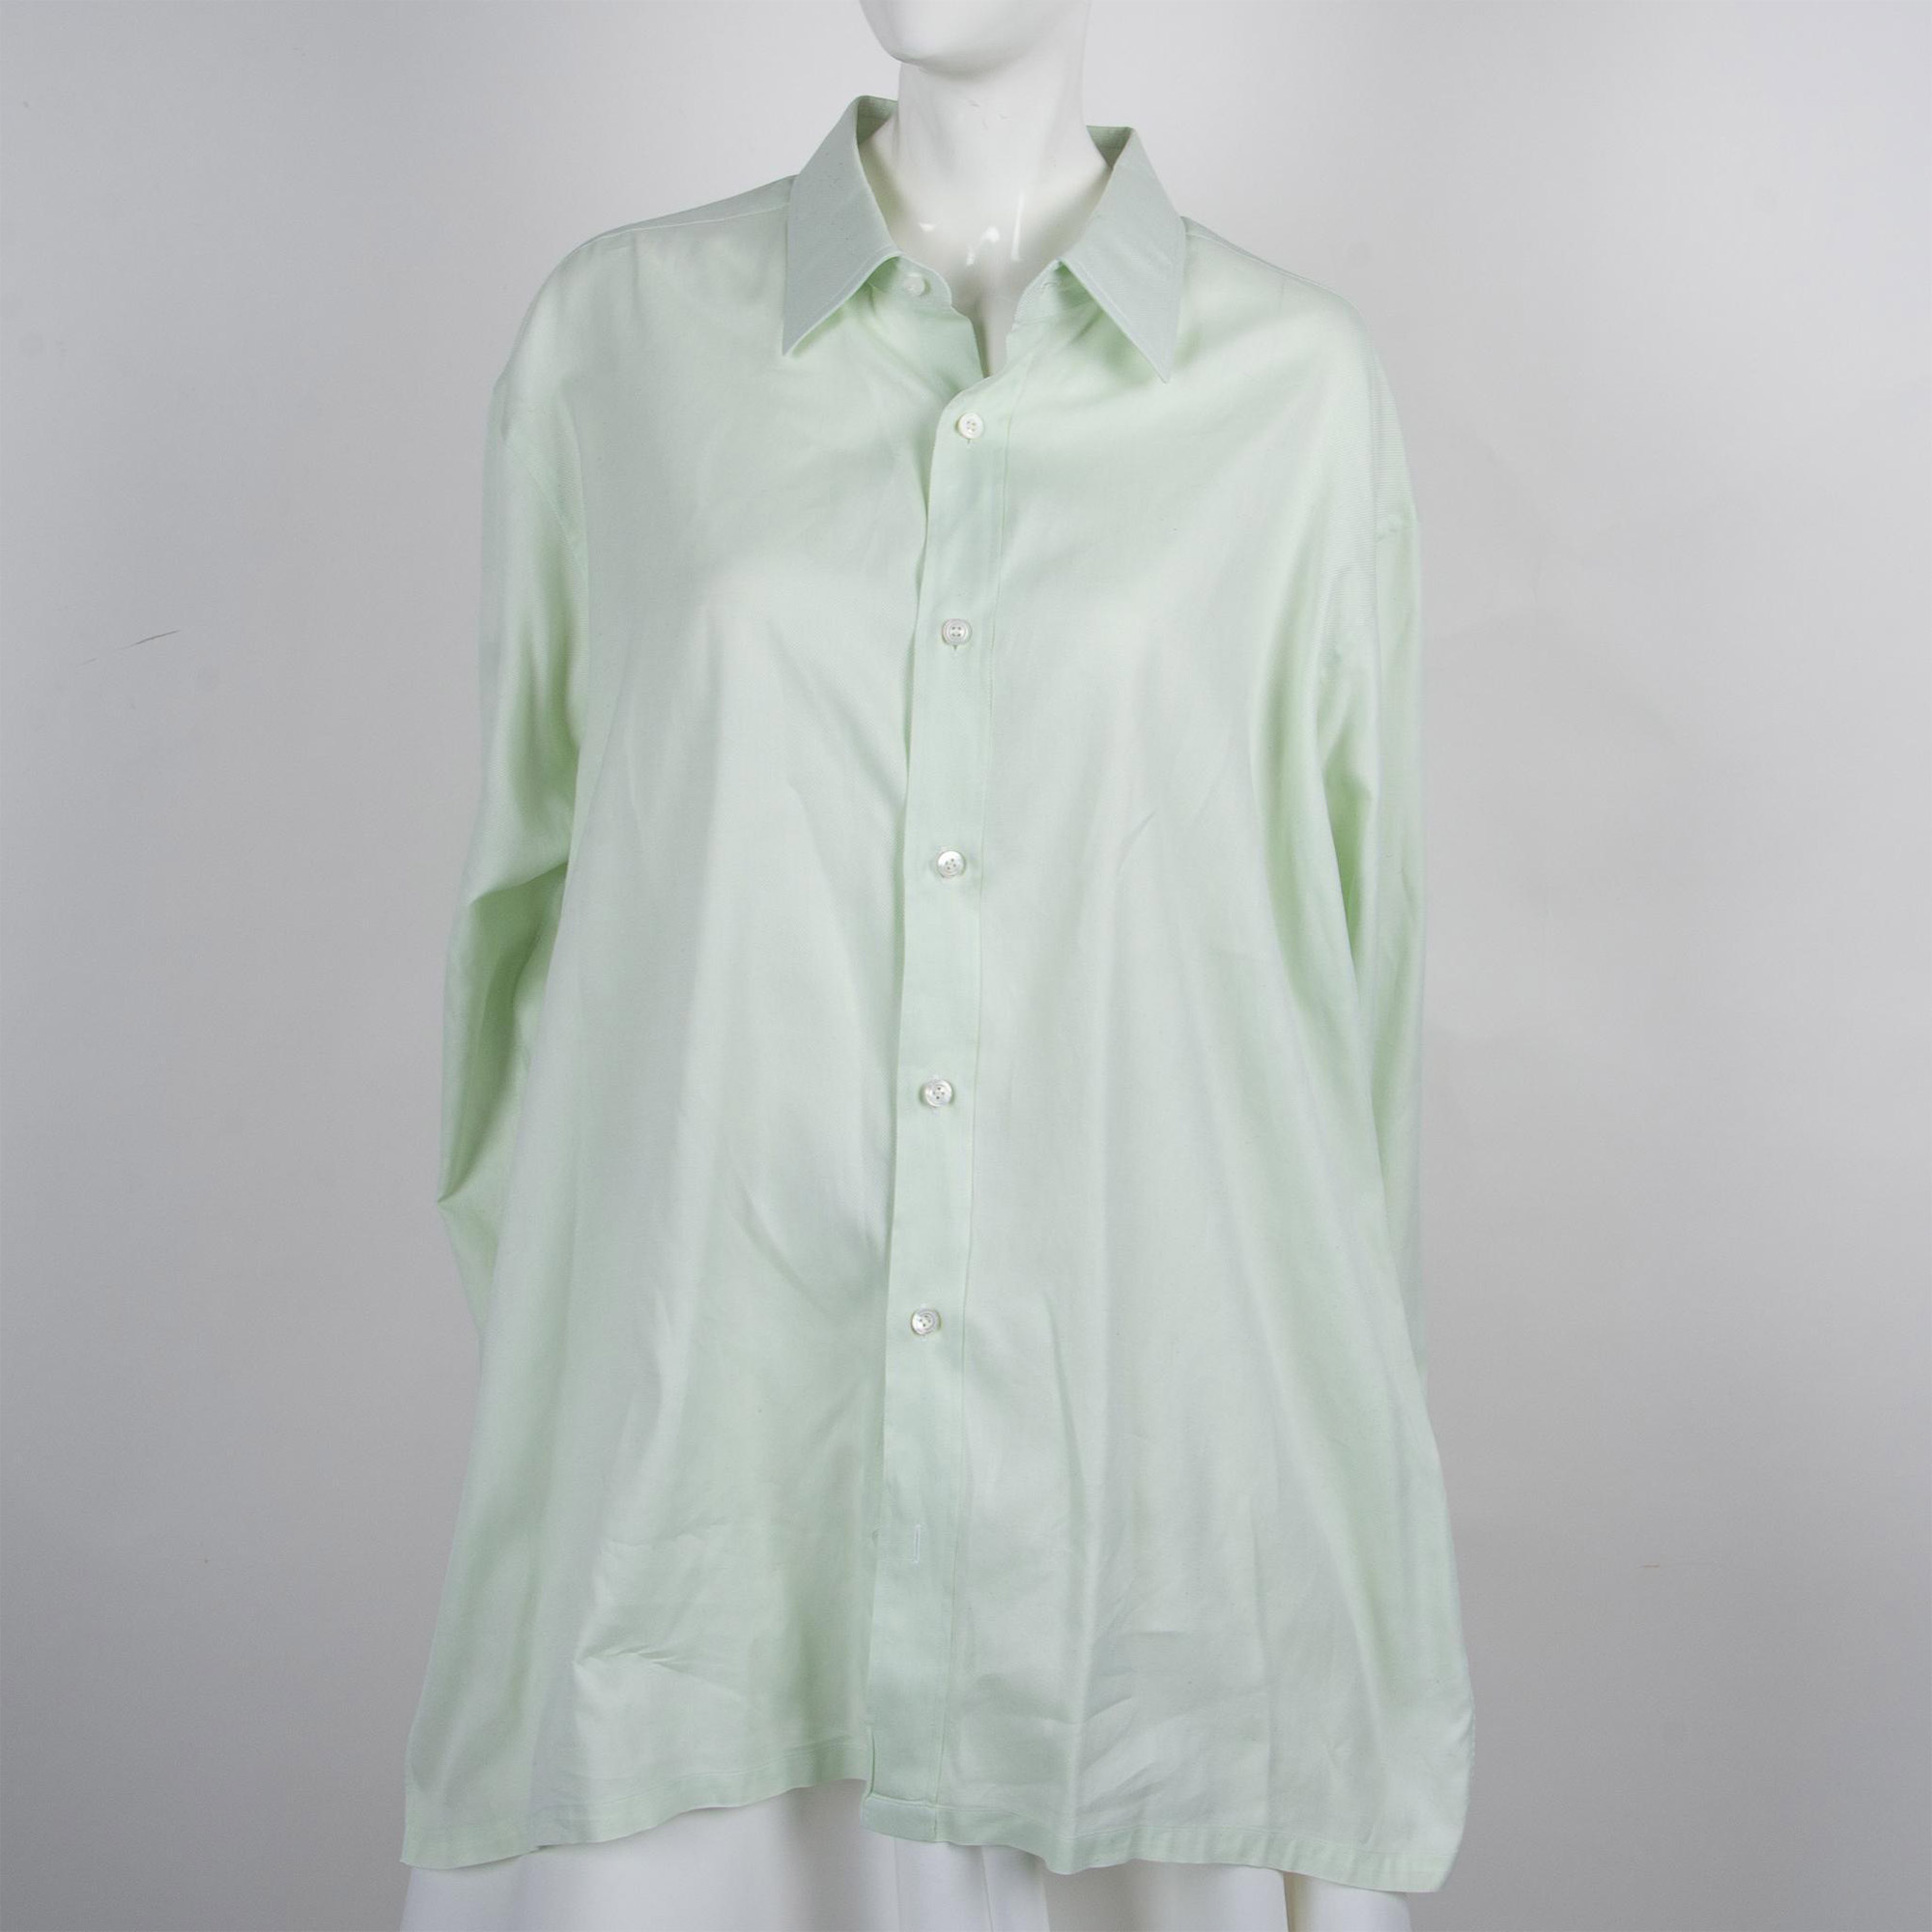 Charvet Men's Long Sleeve Cotton Shirt, Size Large/44.5